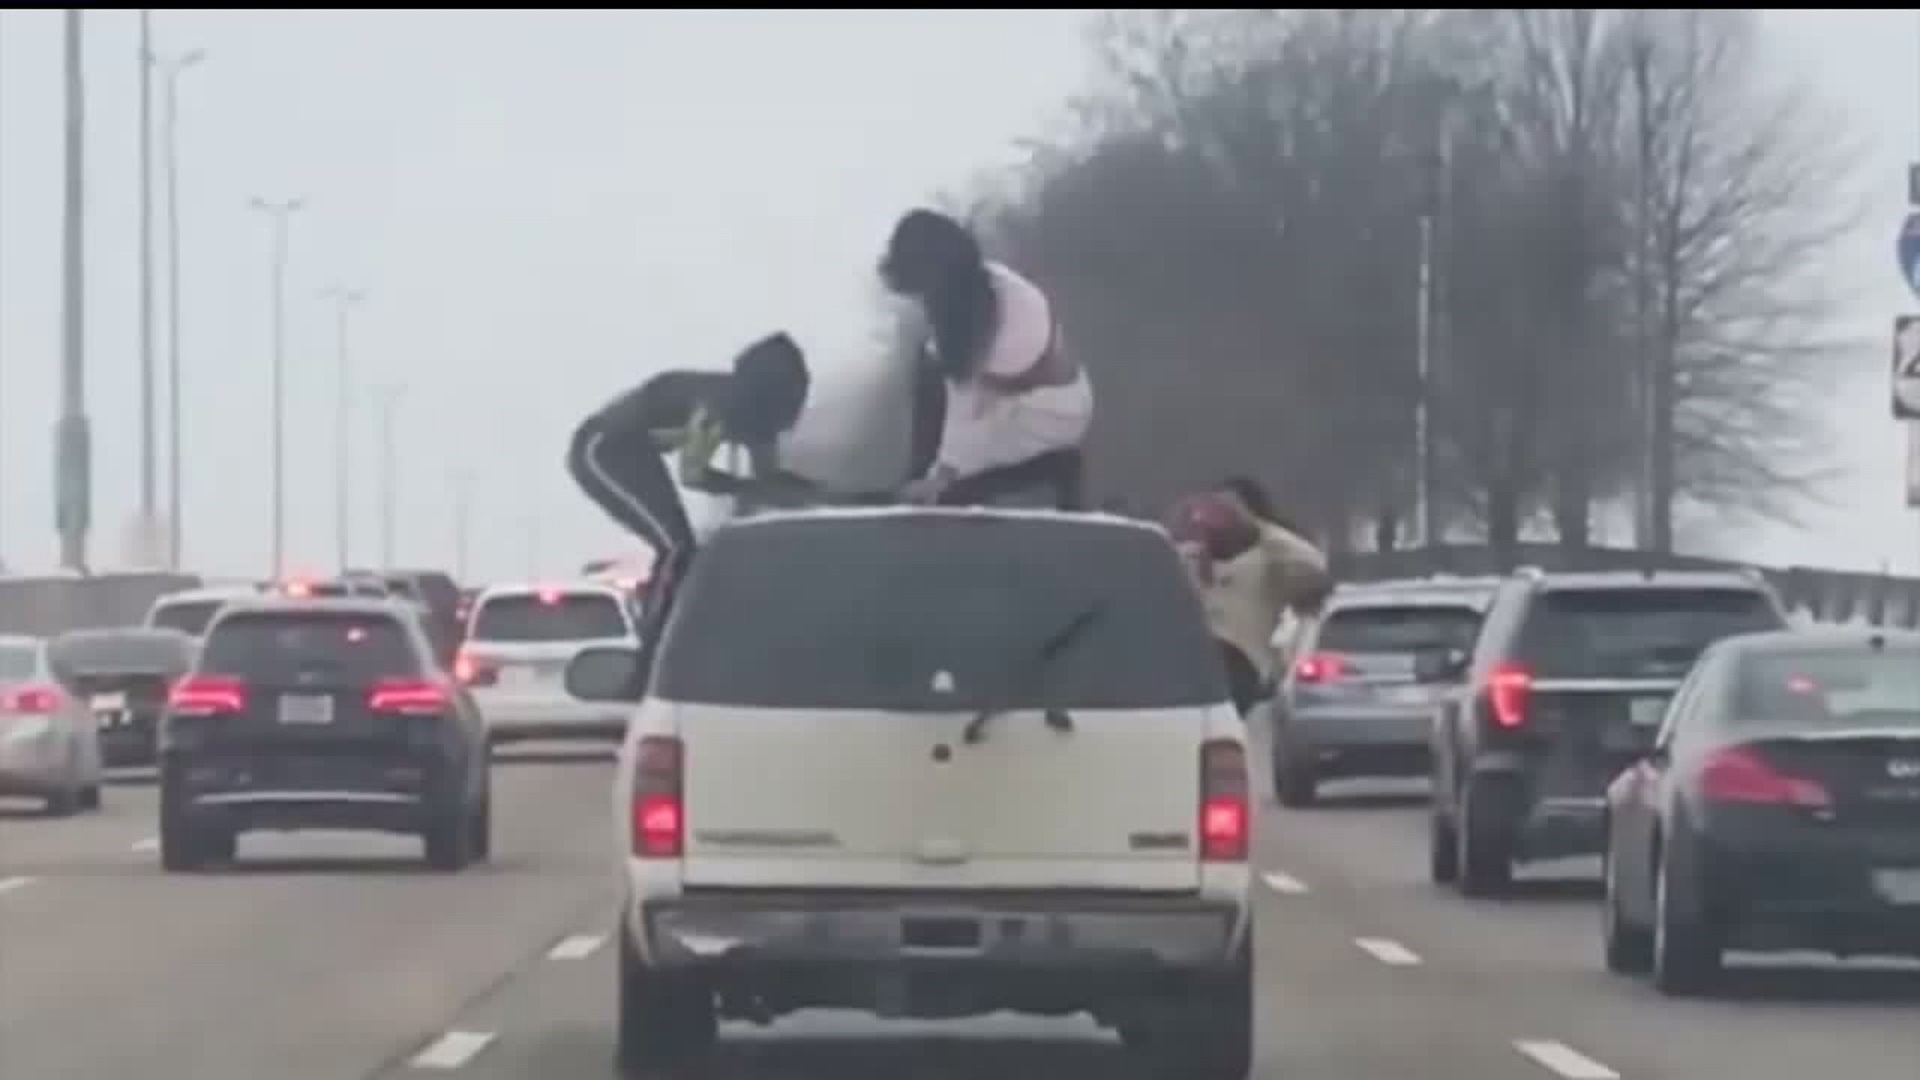 Twerking on Top of a Vehicle...It Really Happened